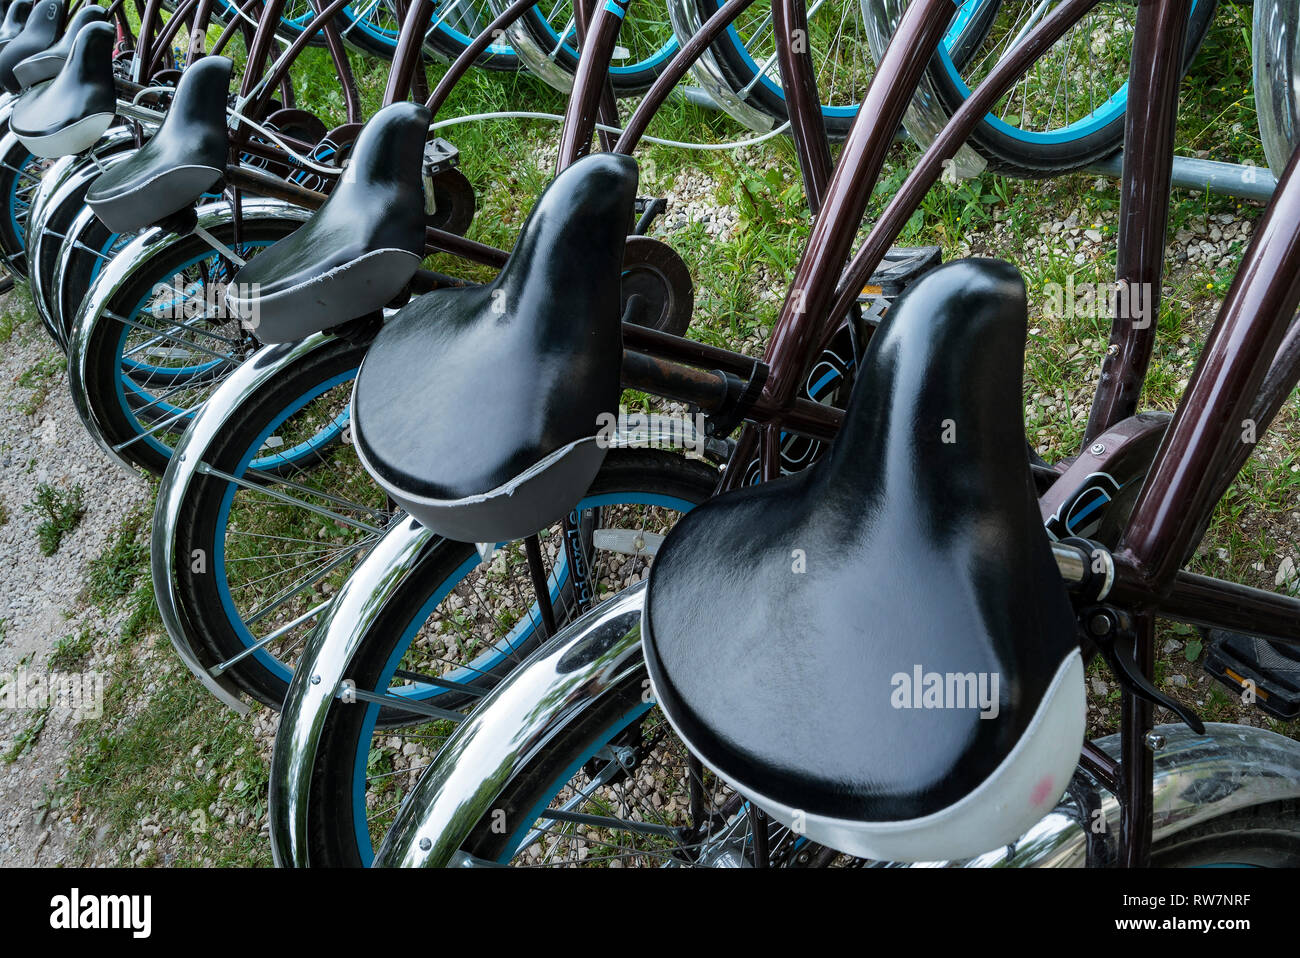 Fahrräder, Sitze & Räder Stockfoto